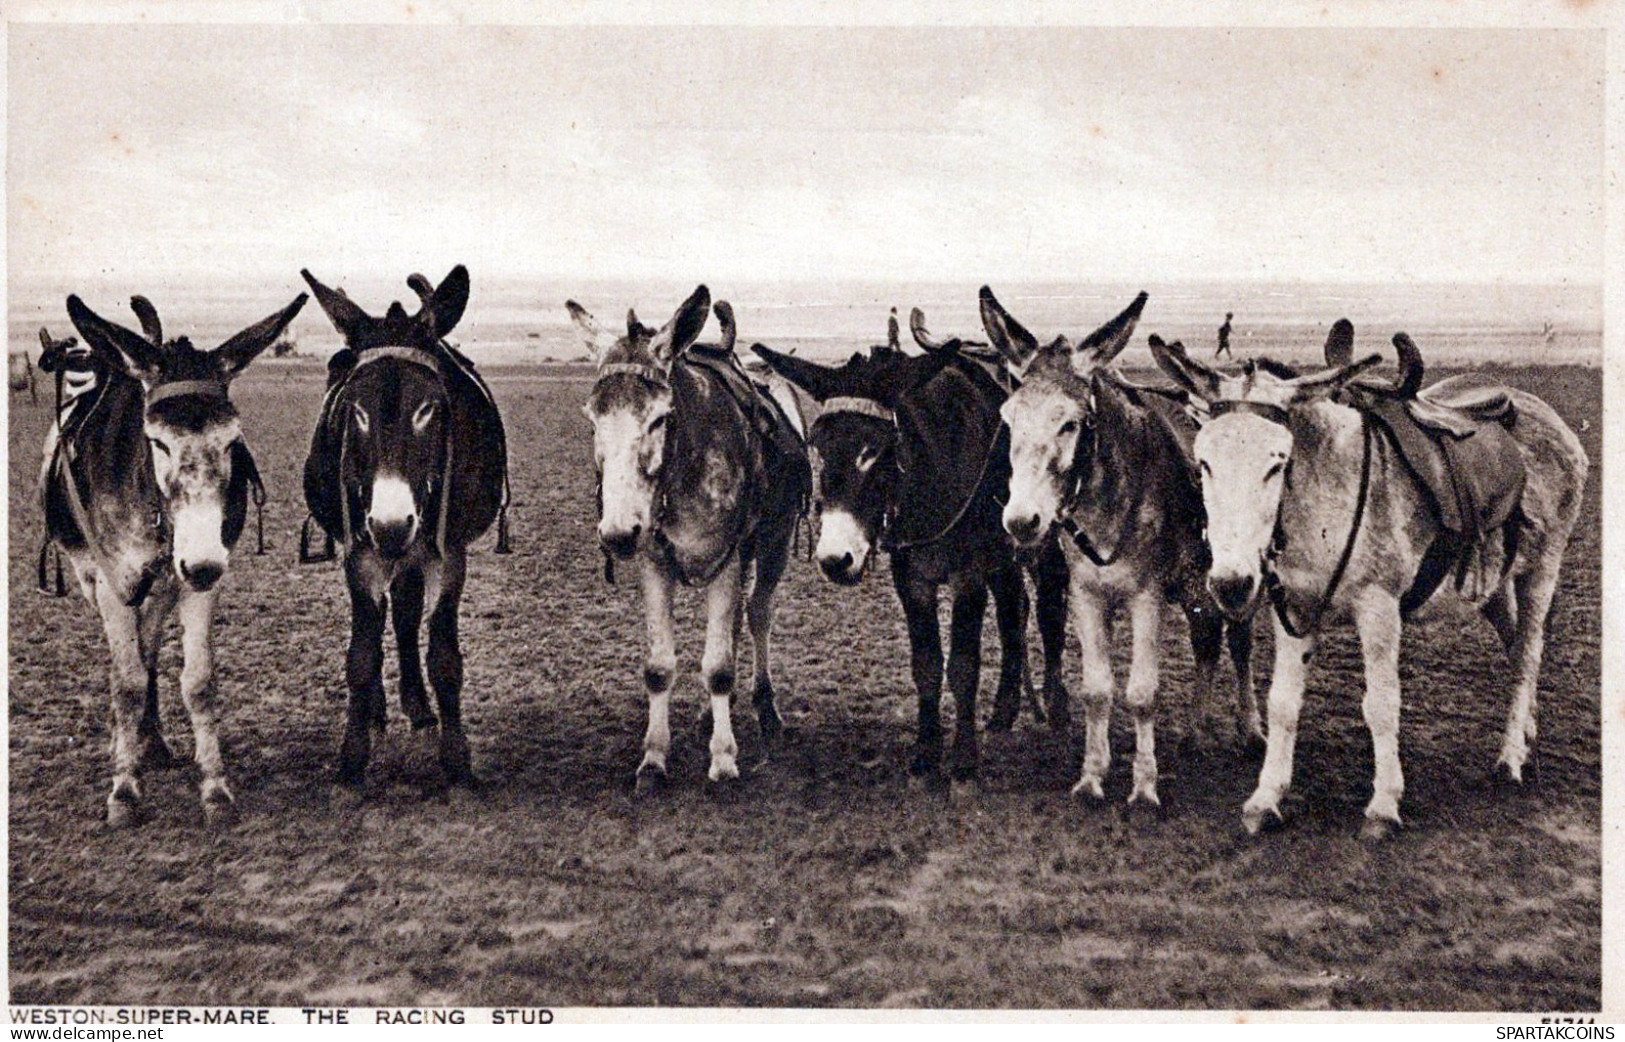 ASINO Animale Vintage CPA Cartolina #PAA065.A - Donkeys